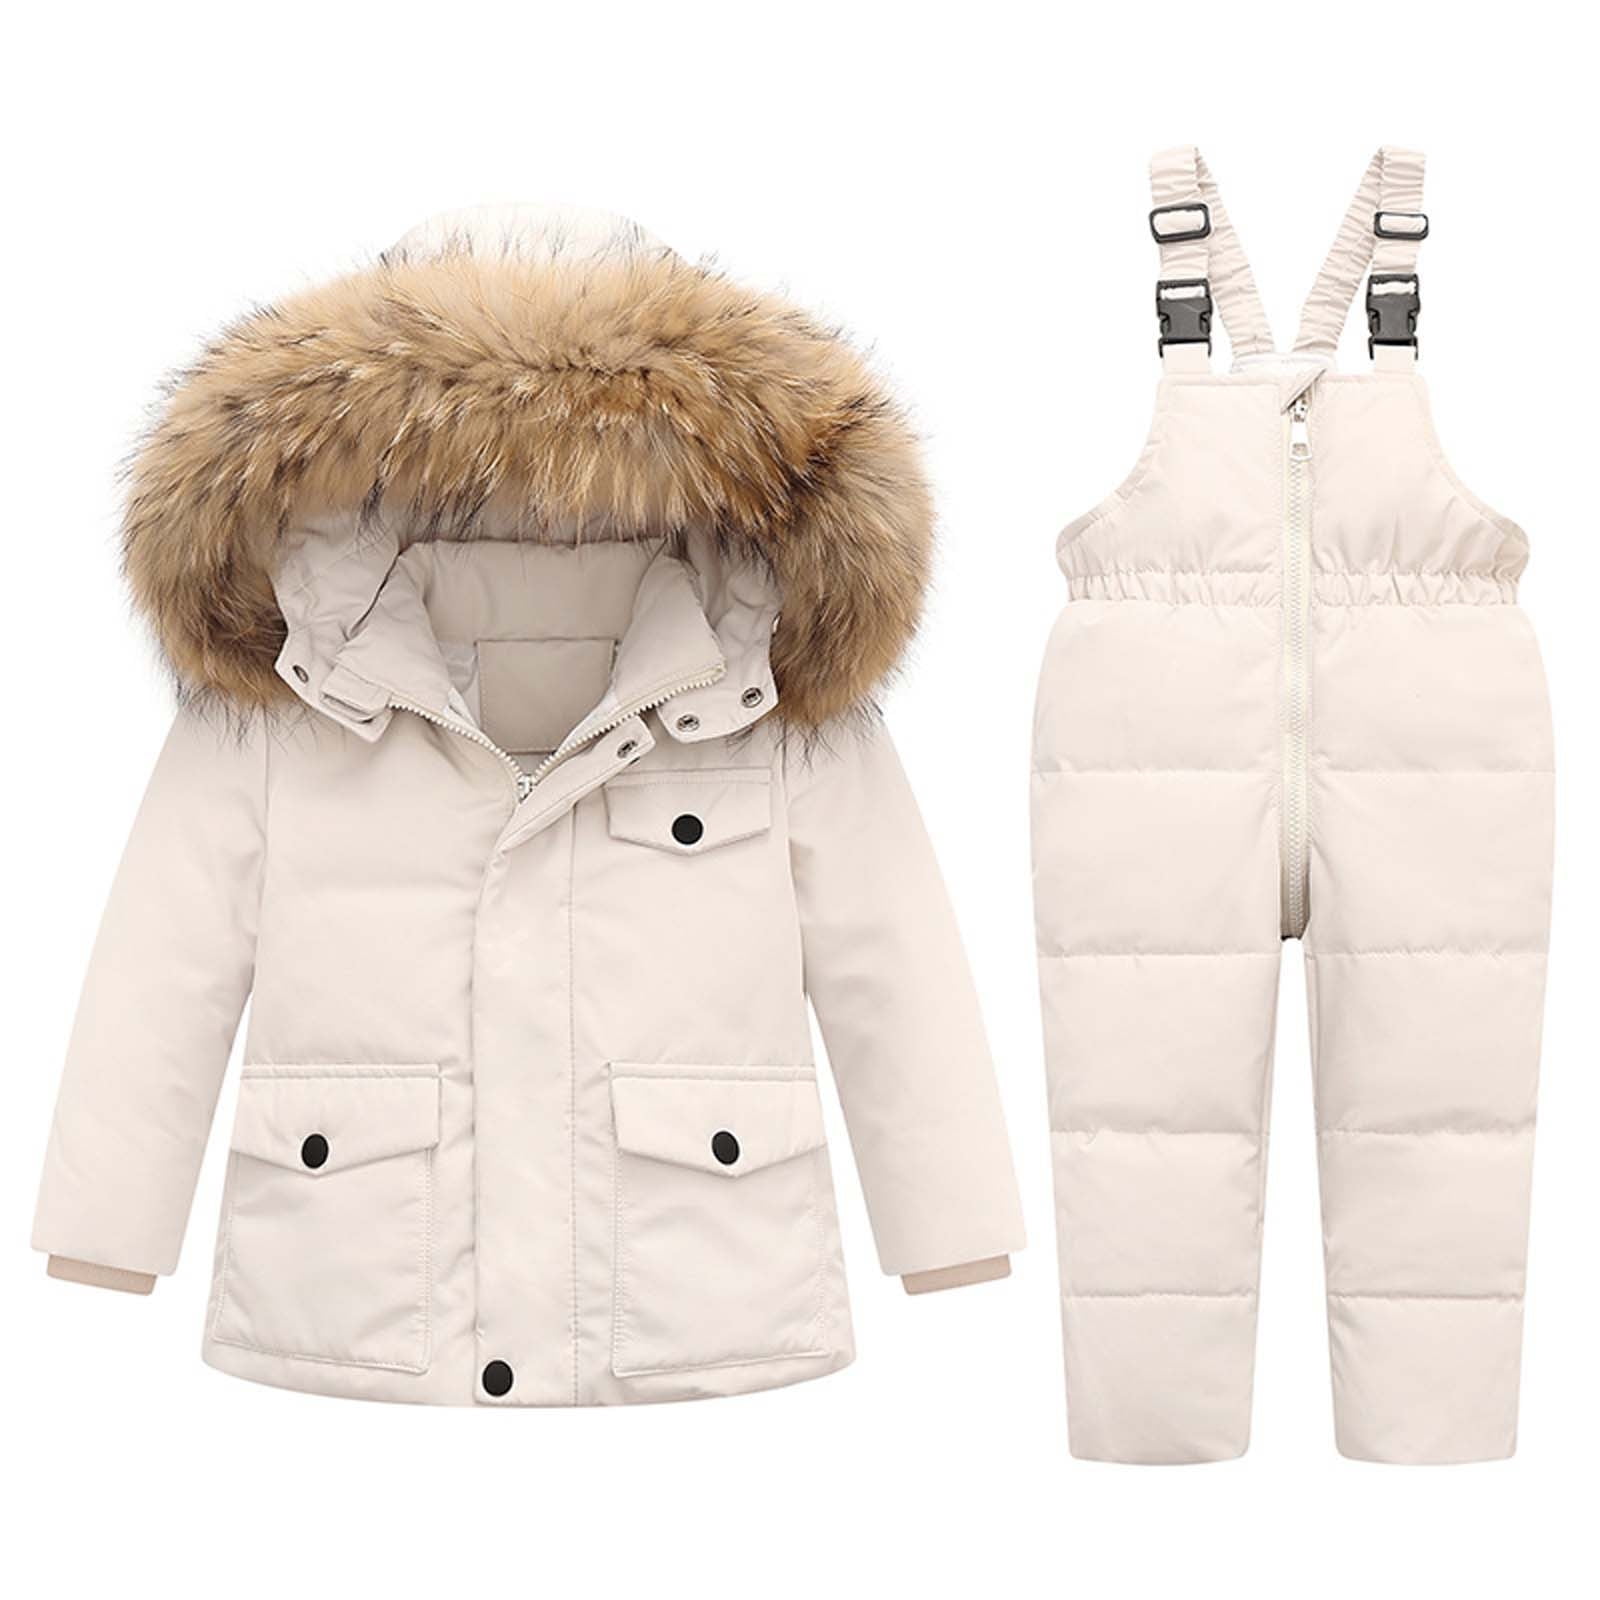 Boy Girl Clothing Set Warm Down Jacket Coat Winter Children Ski Snowsuit Kids 